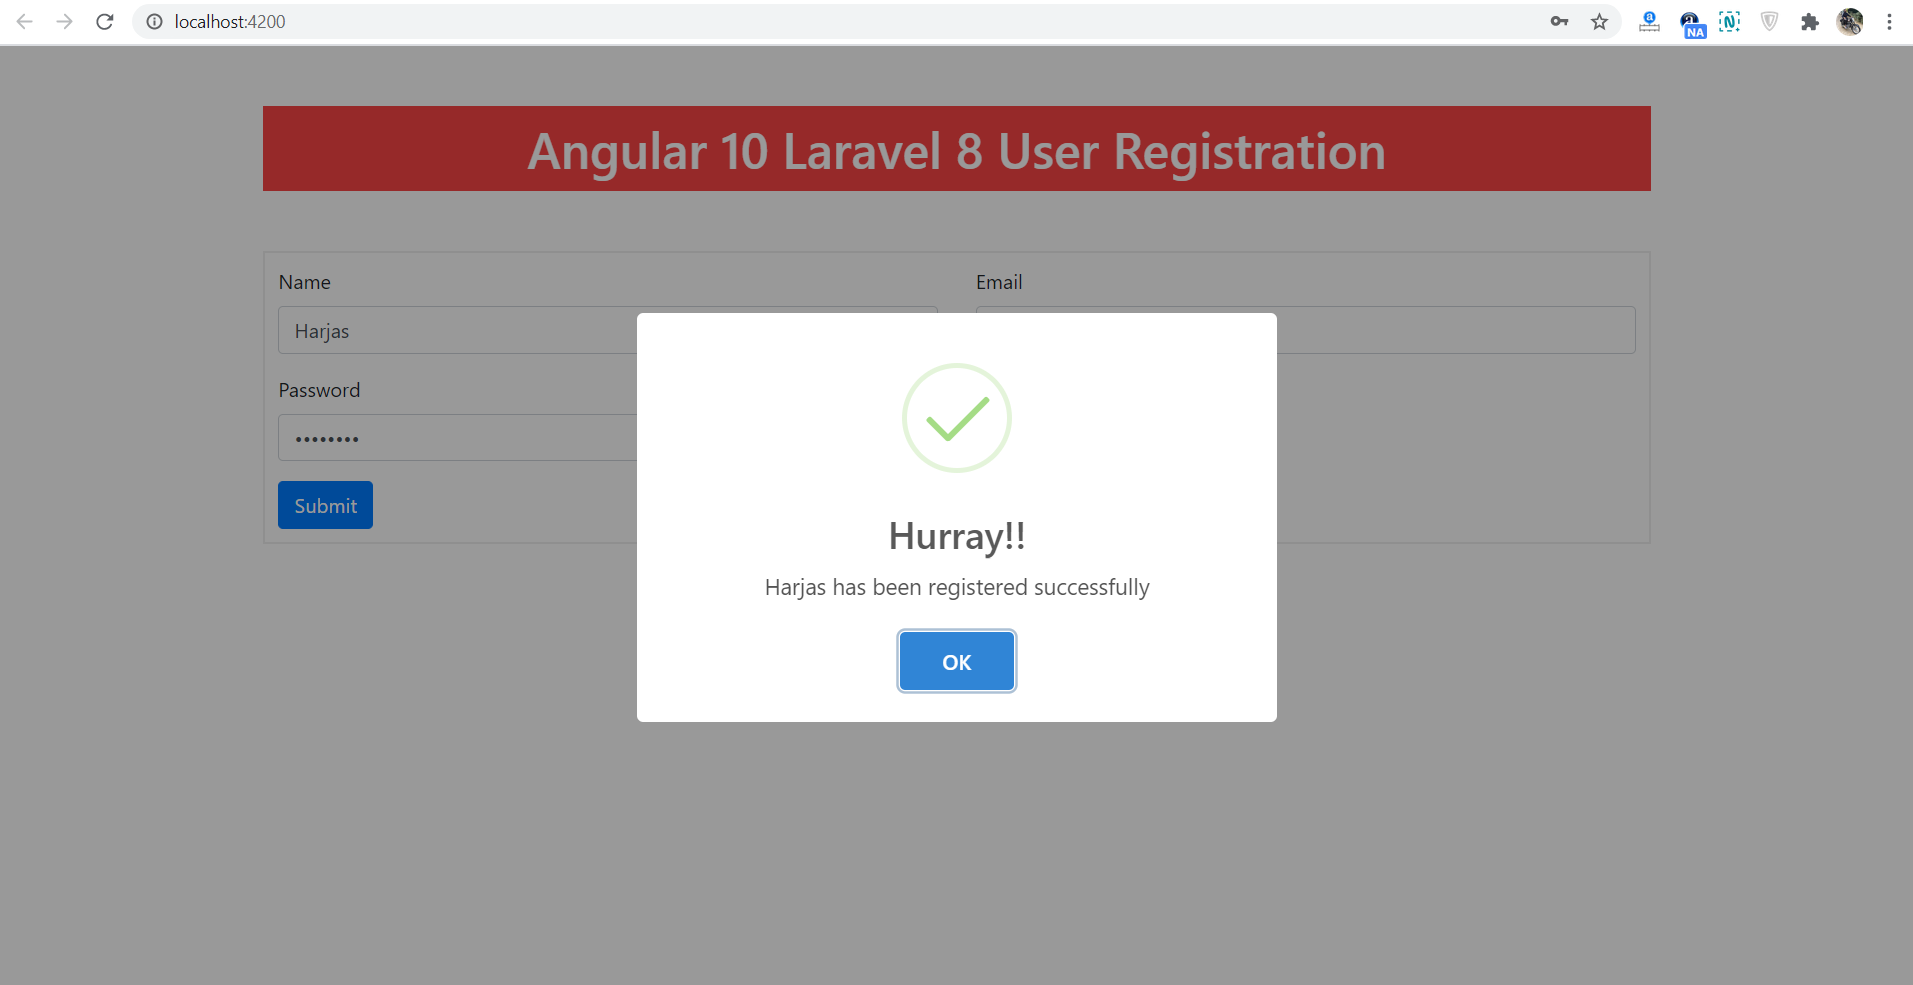 Angular 10 Laravel 8 User Registration Working Demo